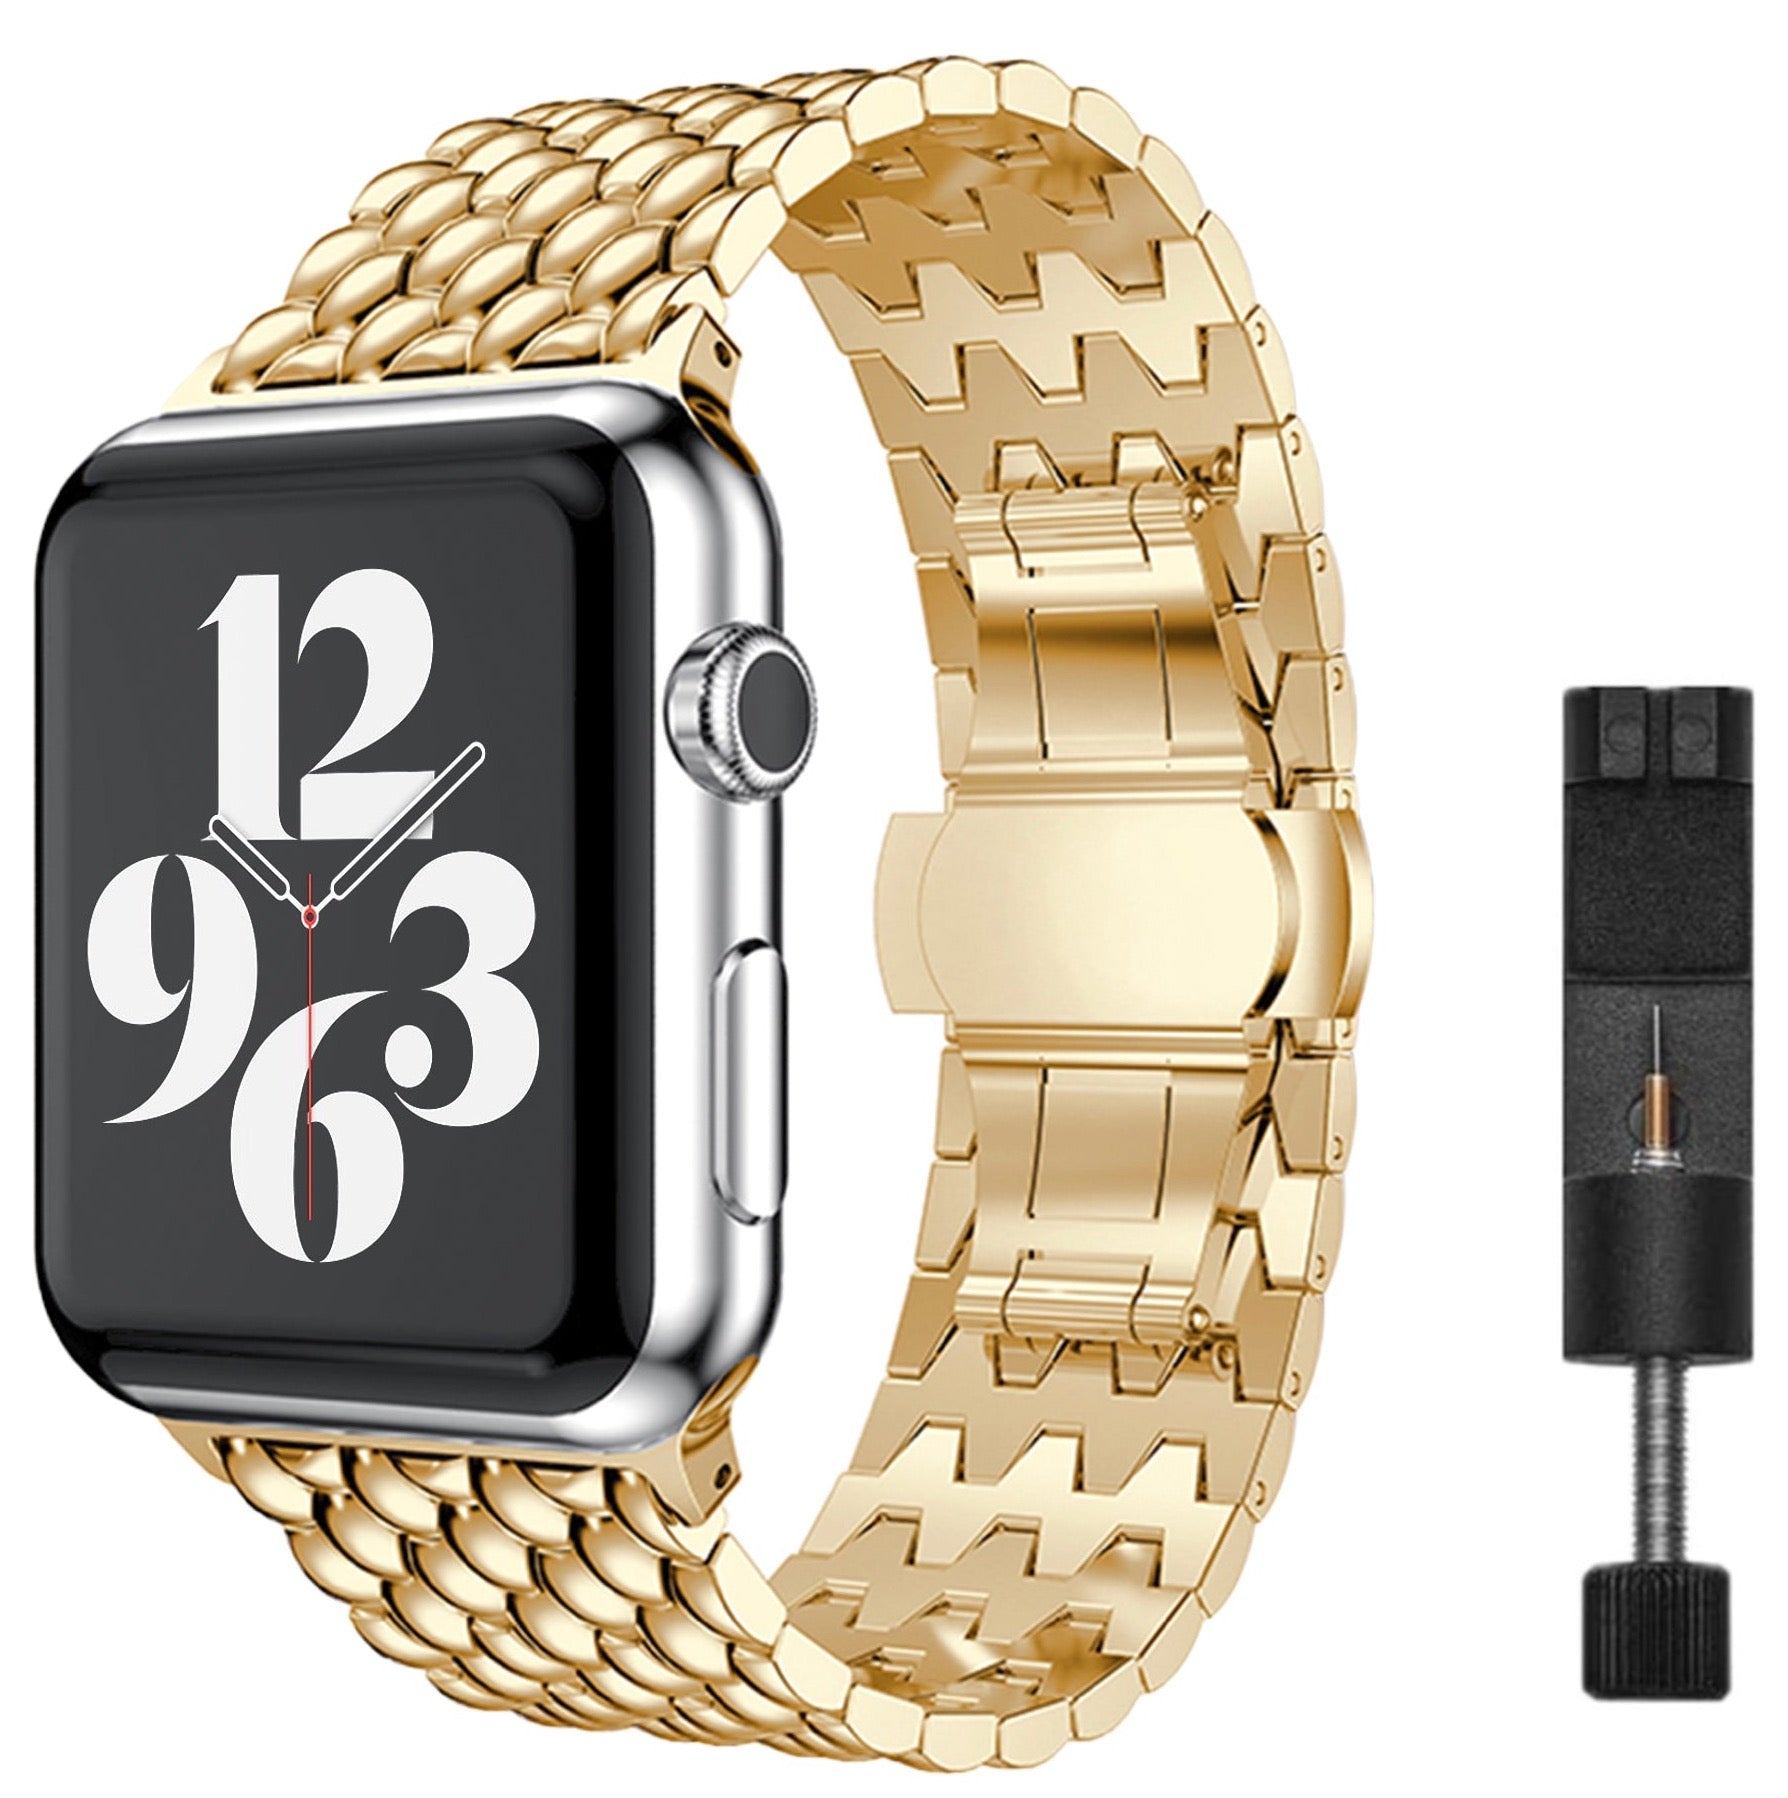 Apple Watch steel dragon strap - gold